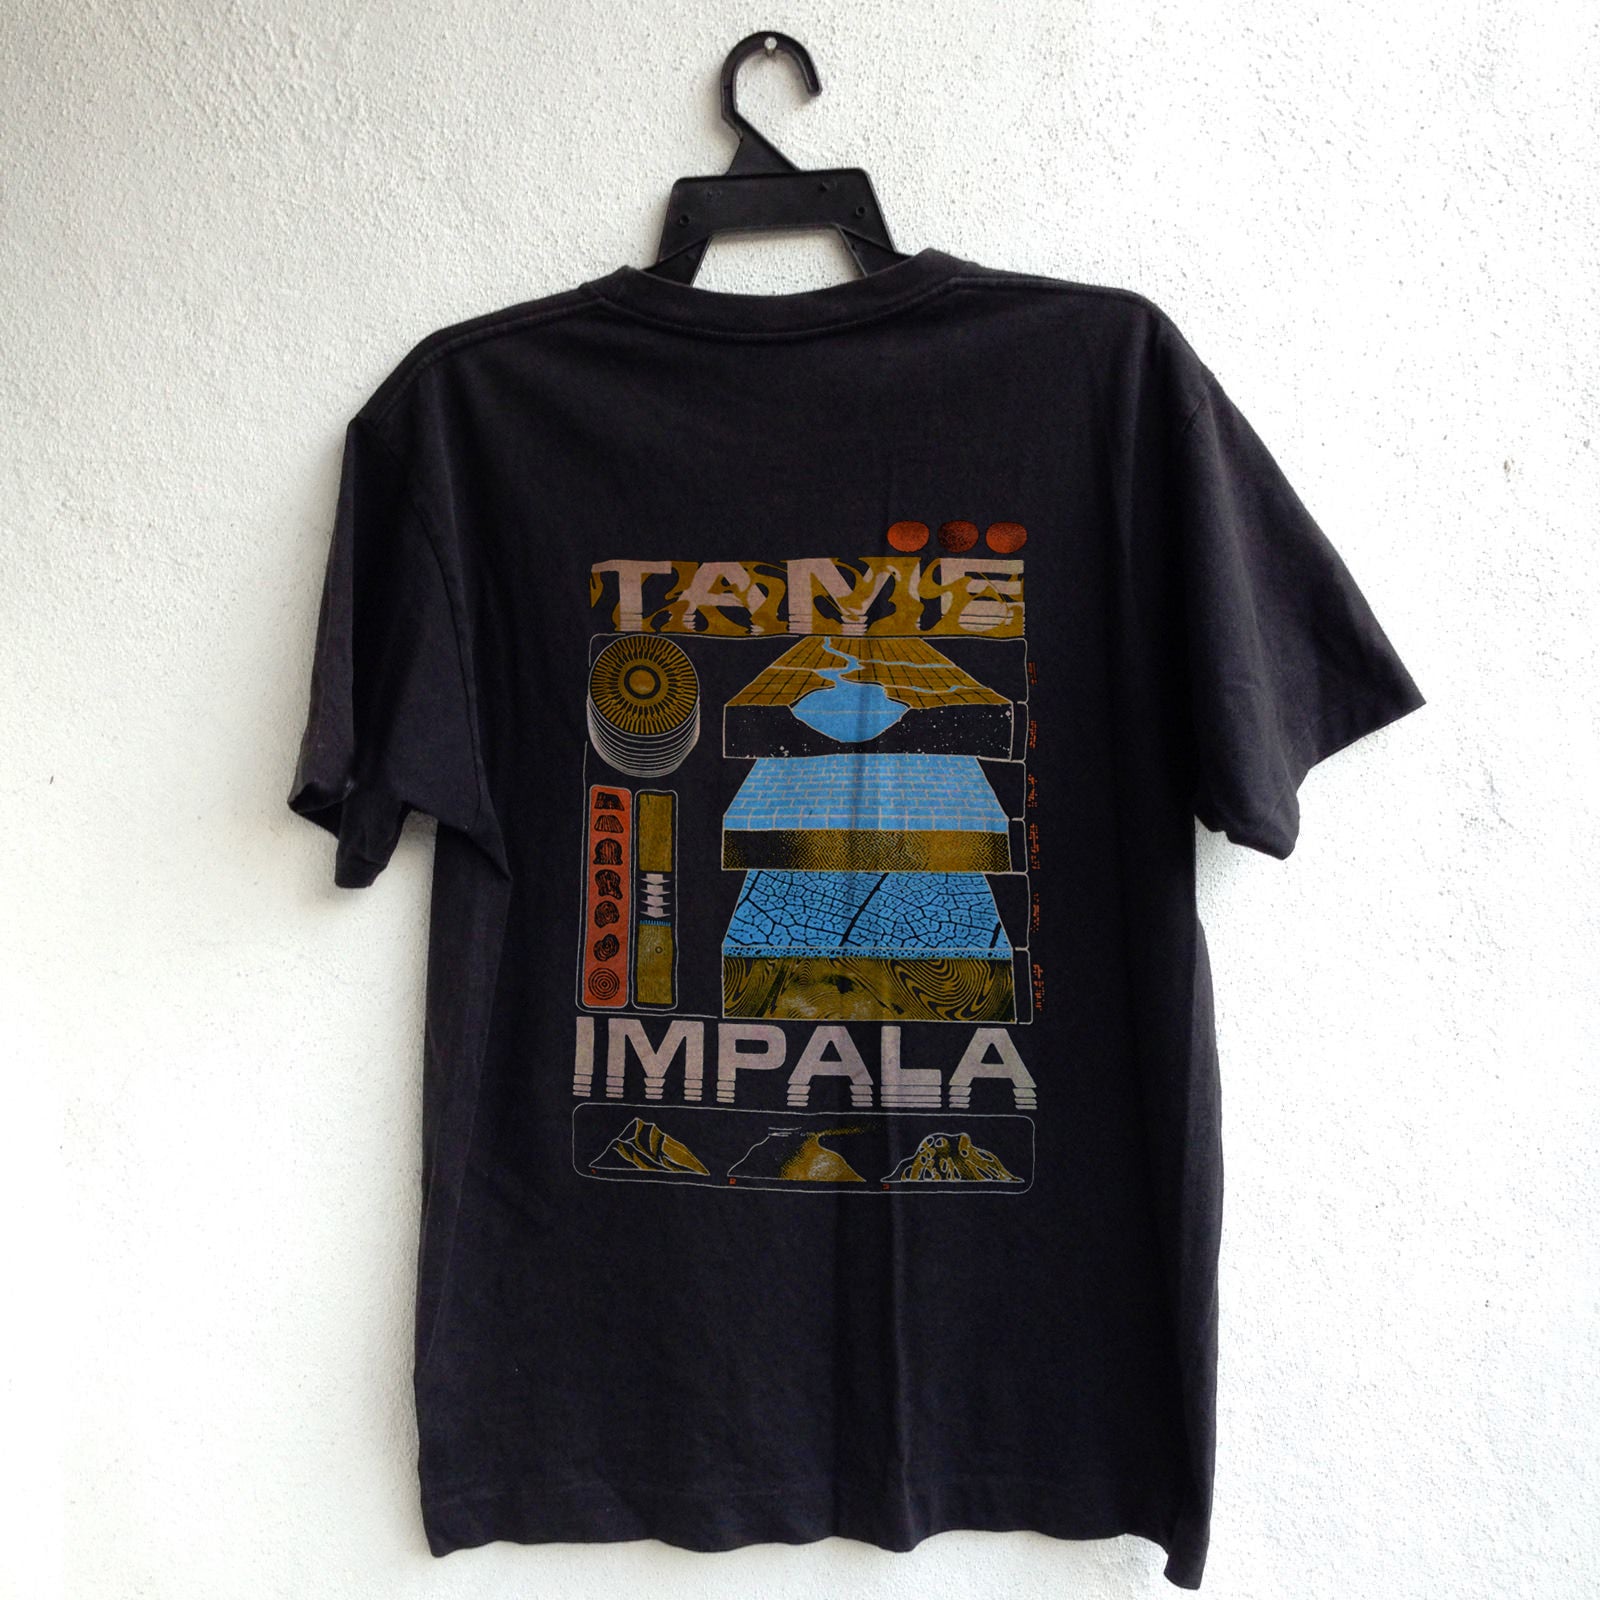 2019 Tame Impala Tour Shirt – House of vintage shirt